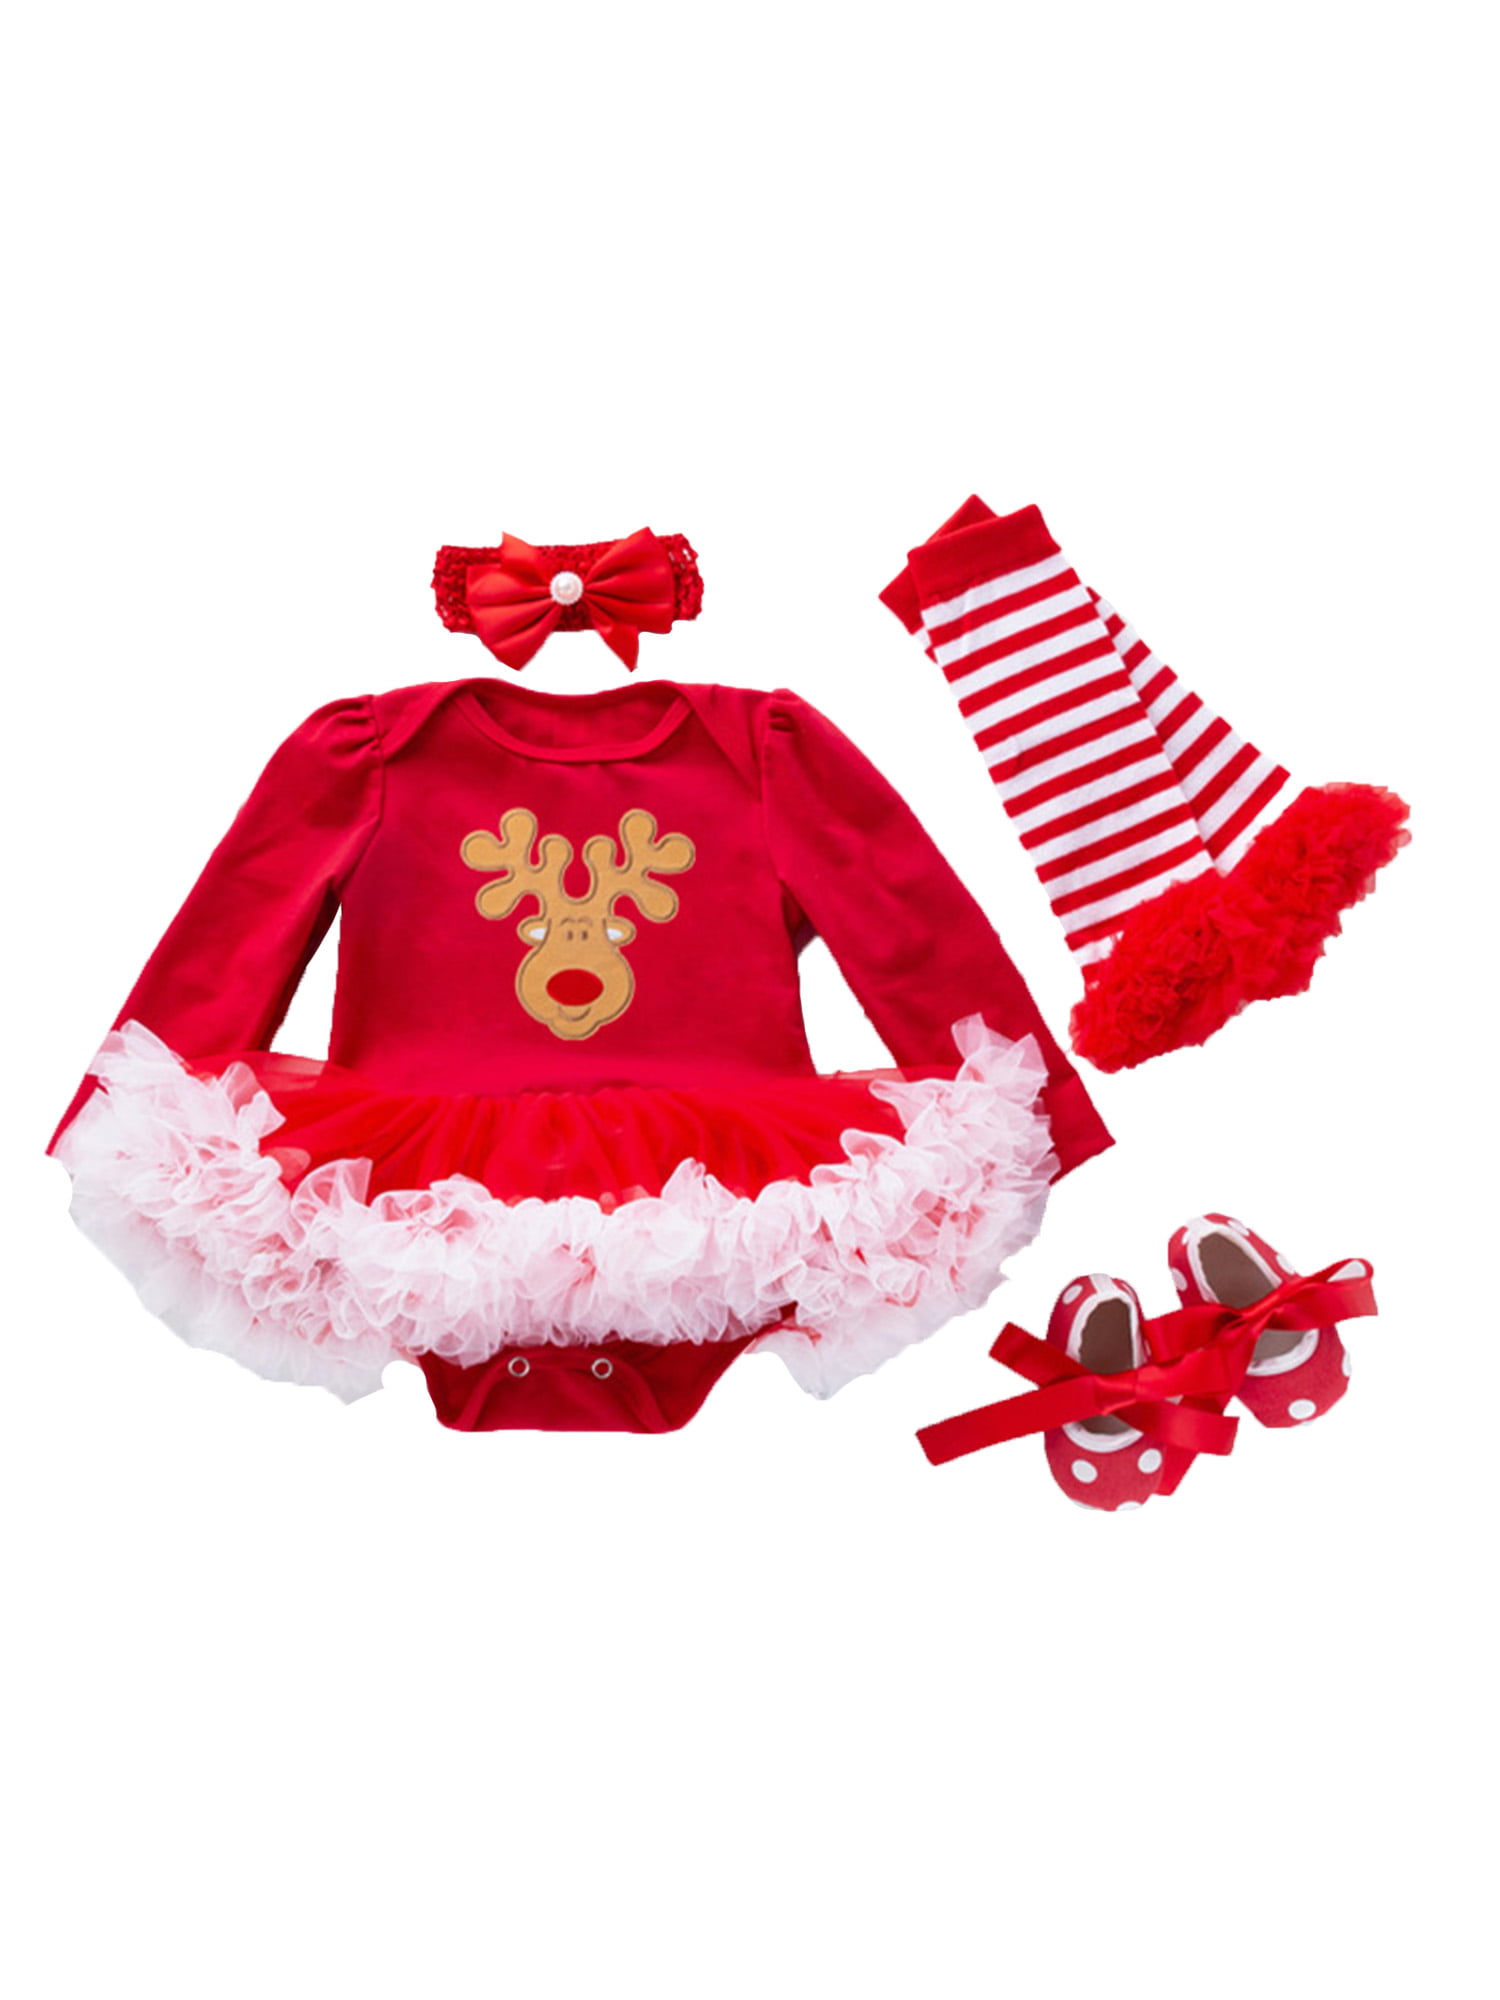 Infant Baby Girls Christmas Romper Dress Outfits Costume Xmas Mesh Tutu Skirt 